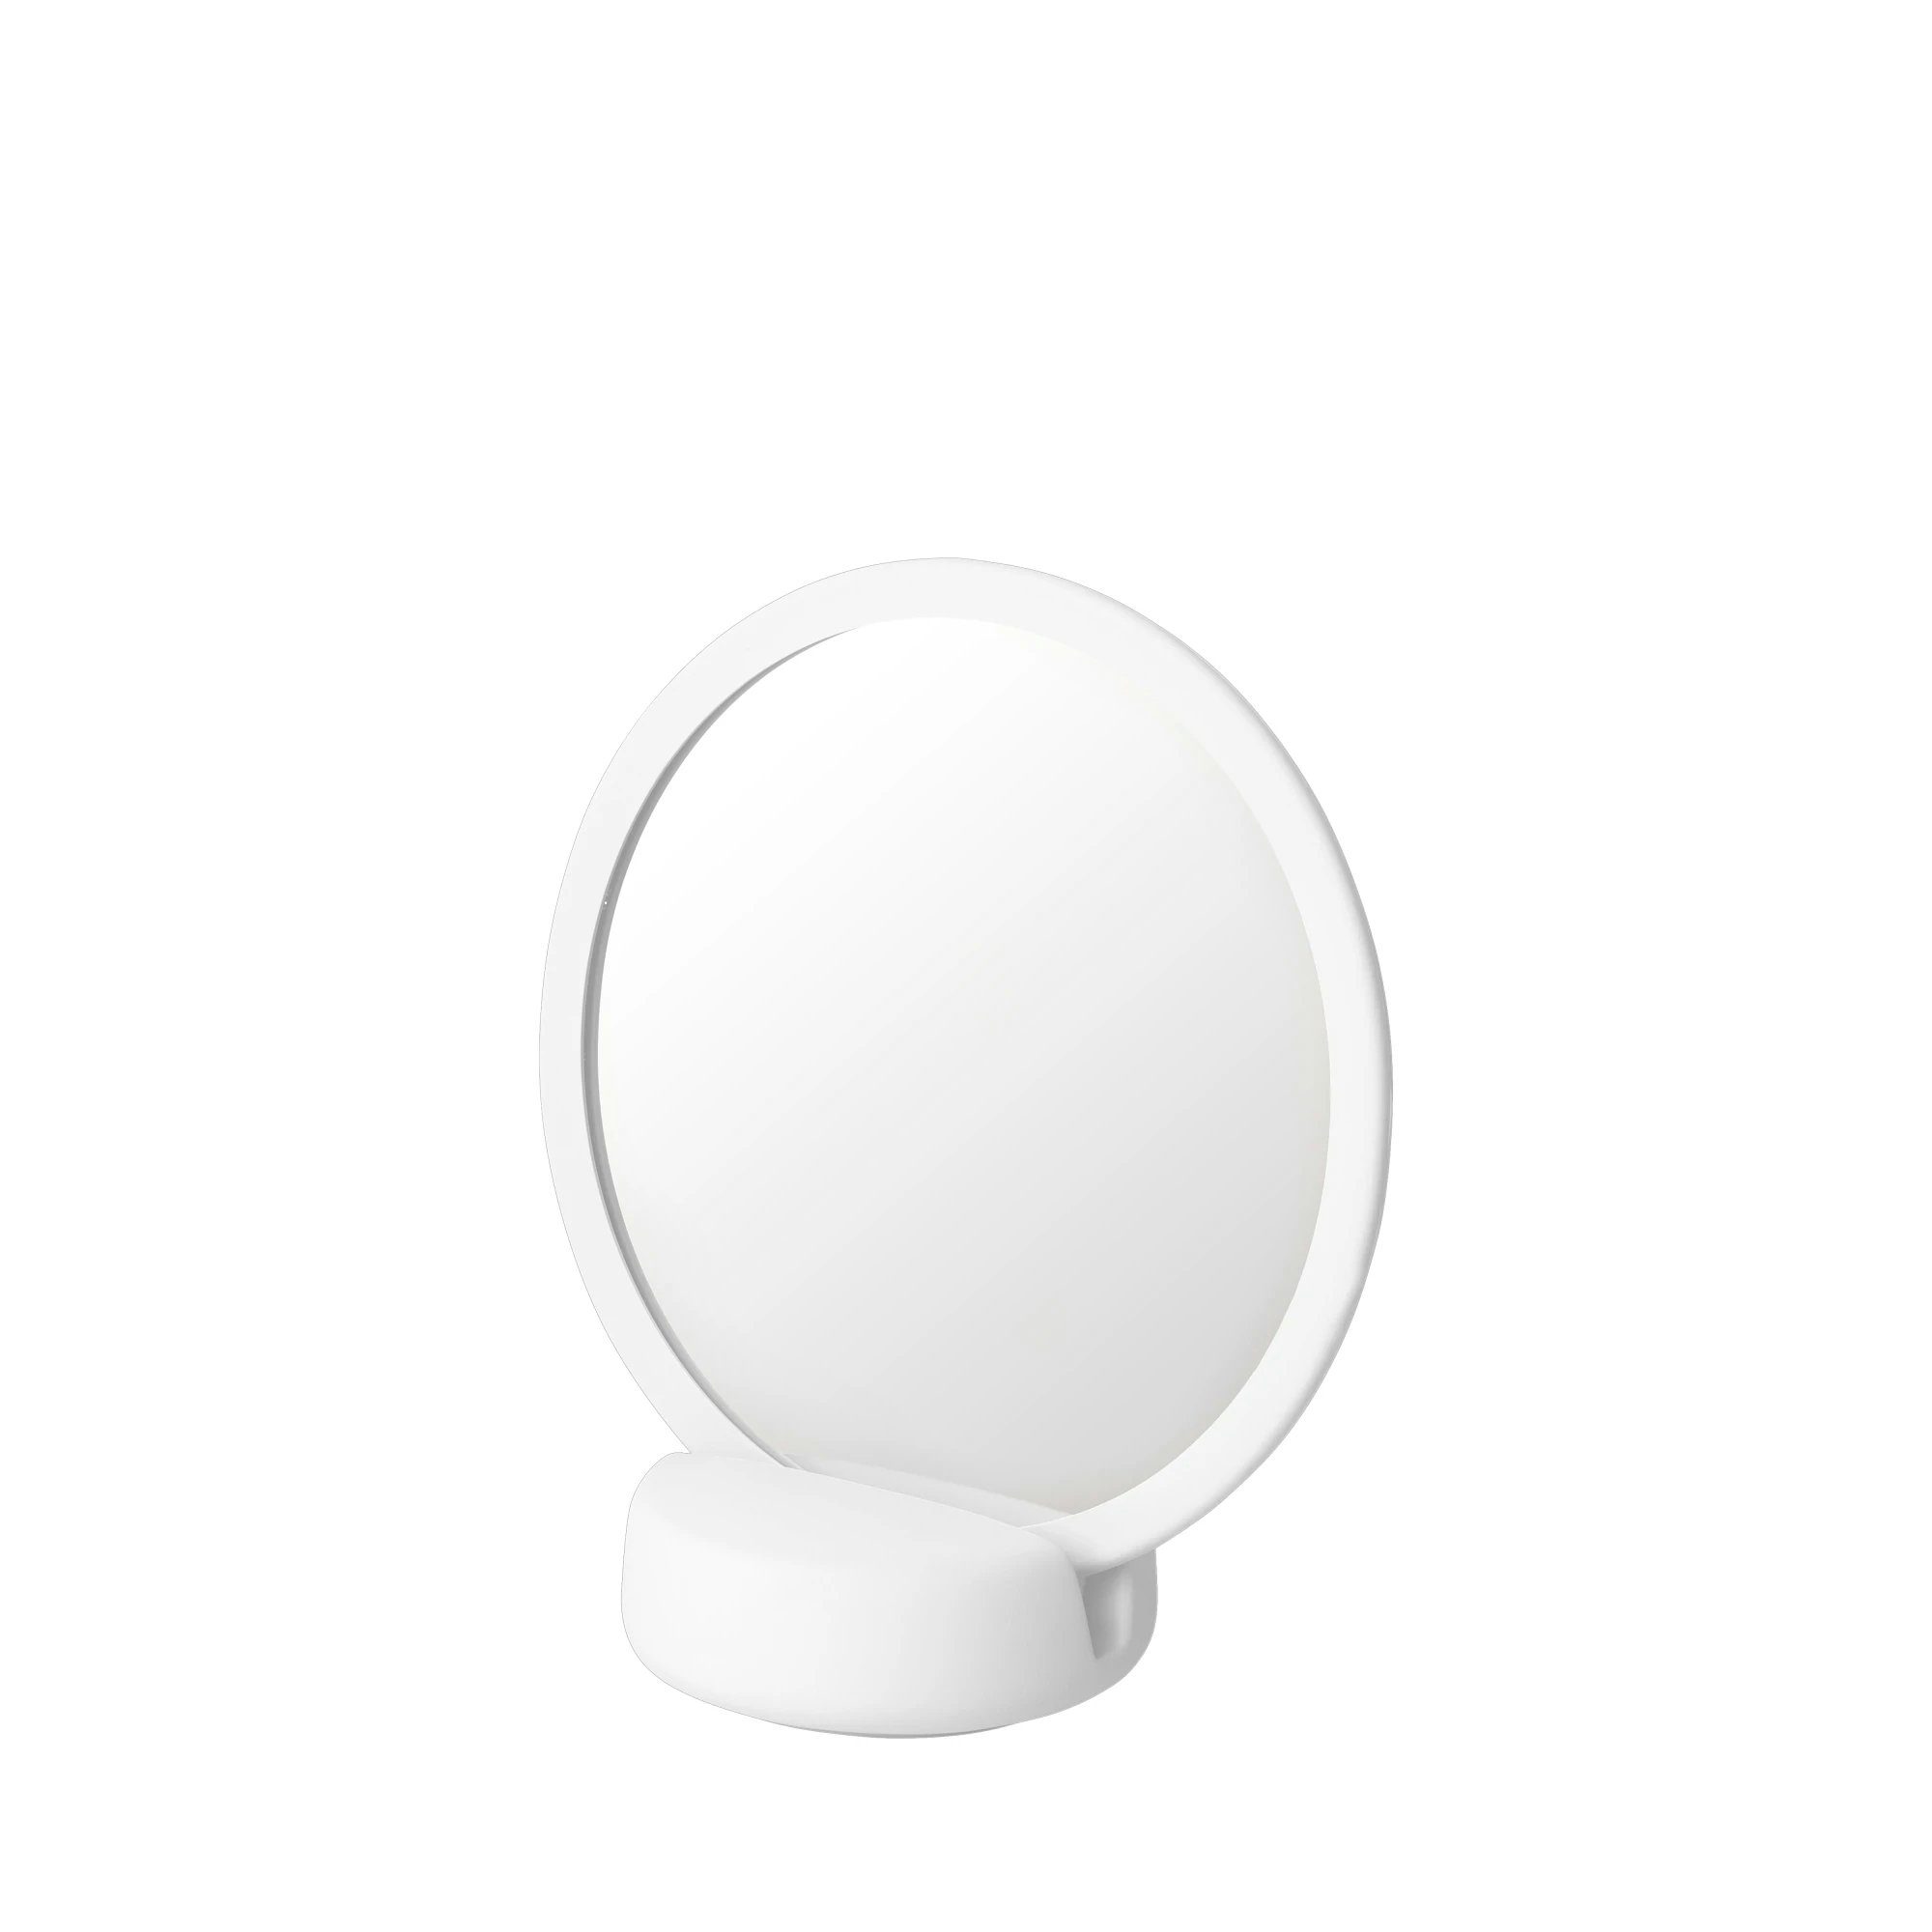 Kosmetikspiegel blomus Kosmetikspiegel Weiß Blomus -SONO-